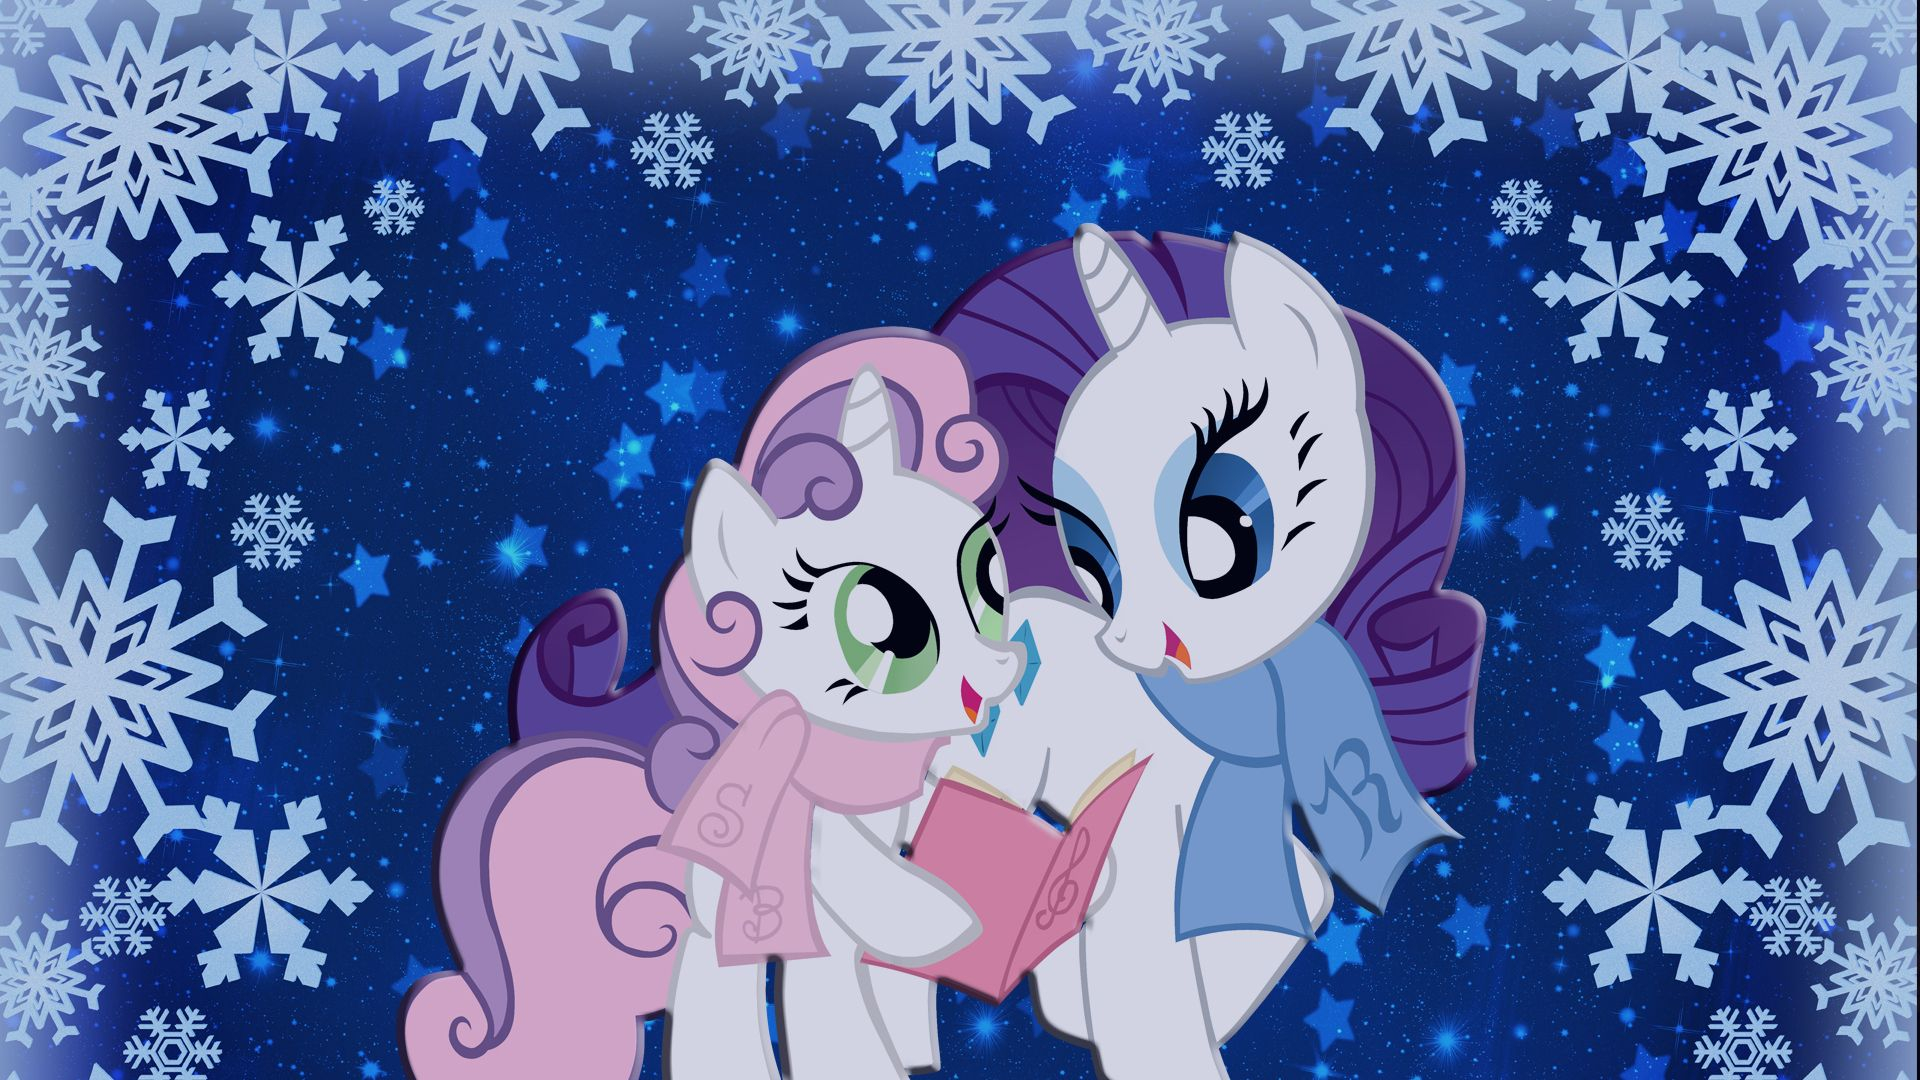 1920x1080 My Little Pony Friendship is Magic Wallpaper: Sisters Caroling | My little pony games, My little pony friendship, My little pony